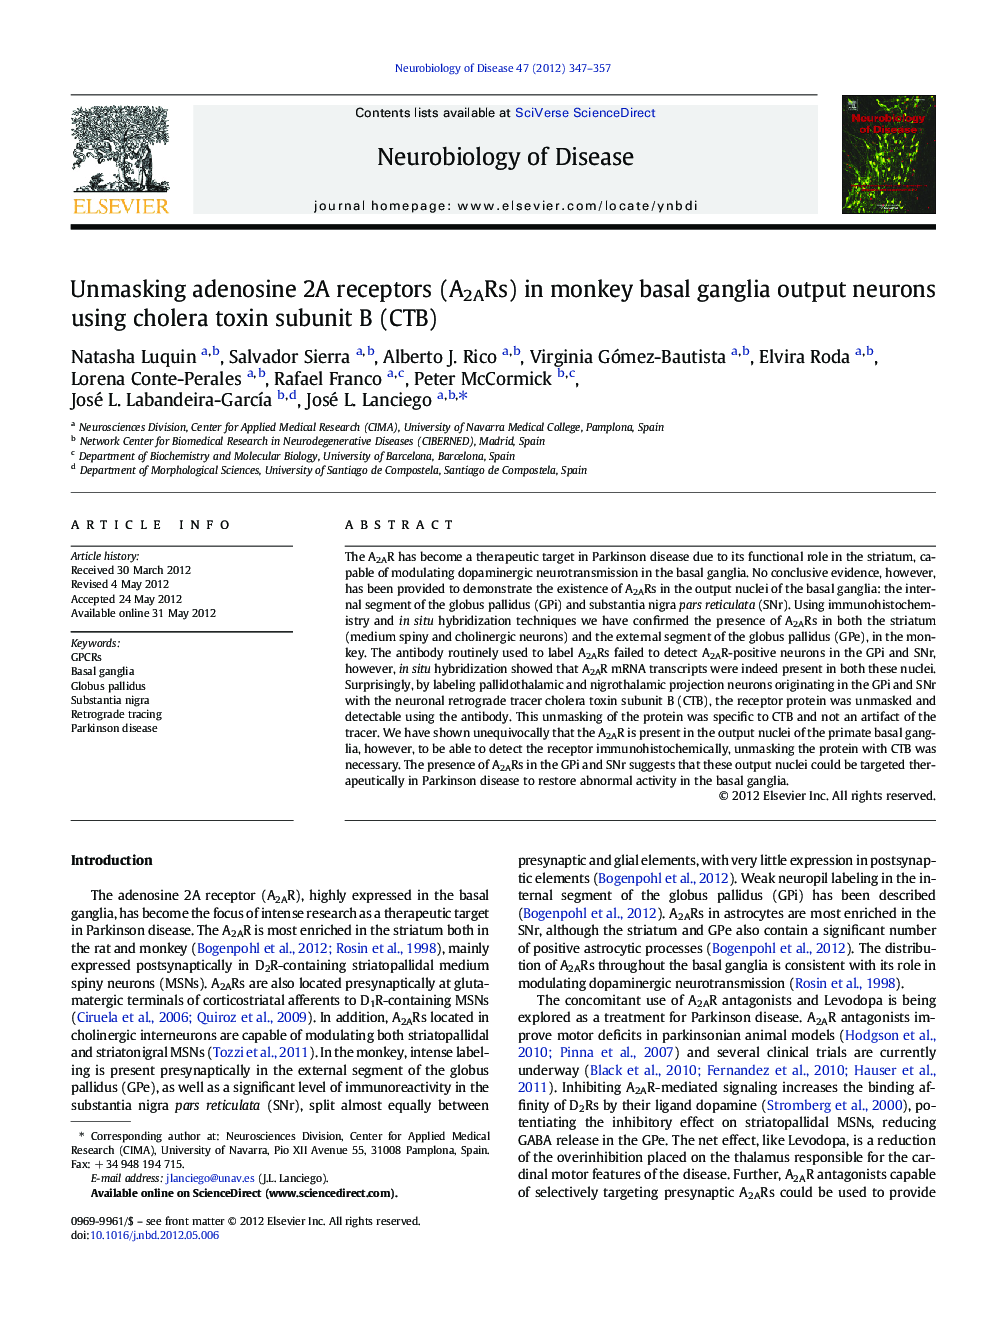 Unmasking adenosine 2A receptors (A2ARs) in monkey basal ganglia output neurons using cholera toxin subunit B (CTB)